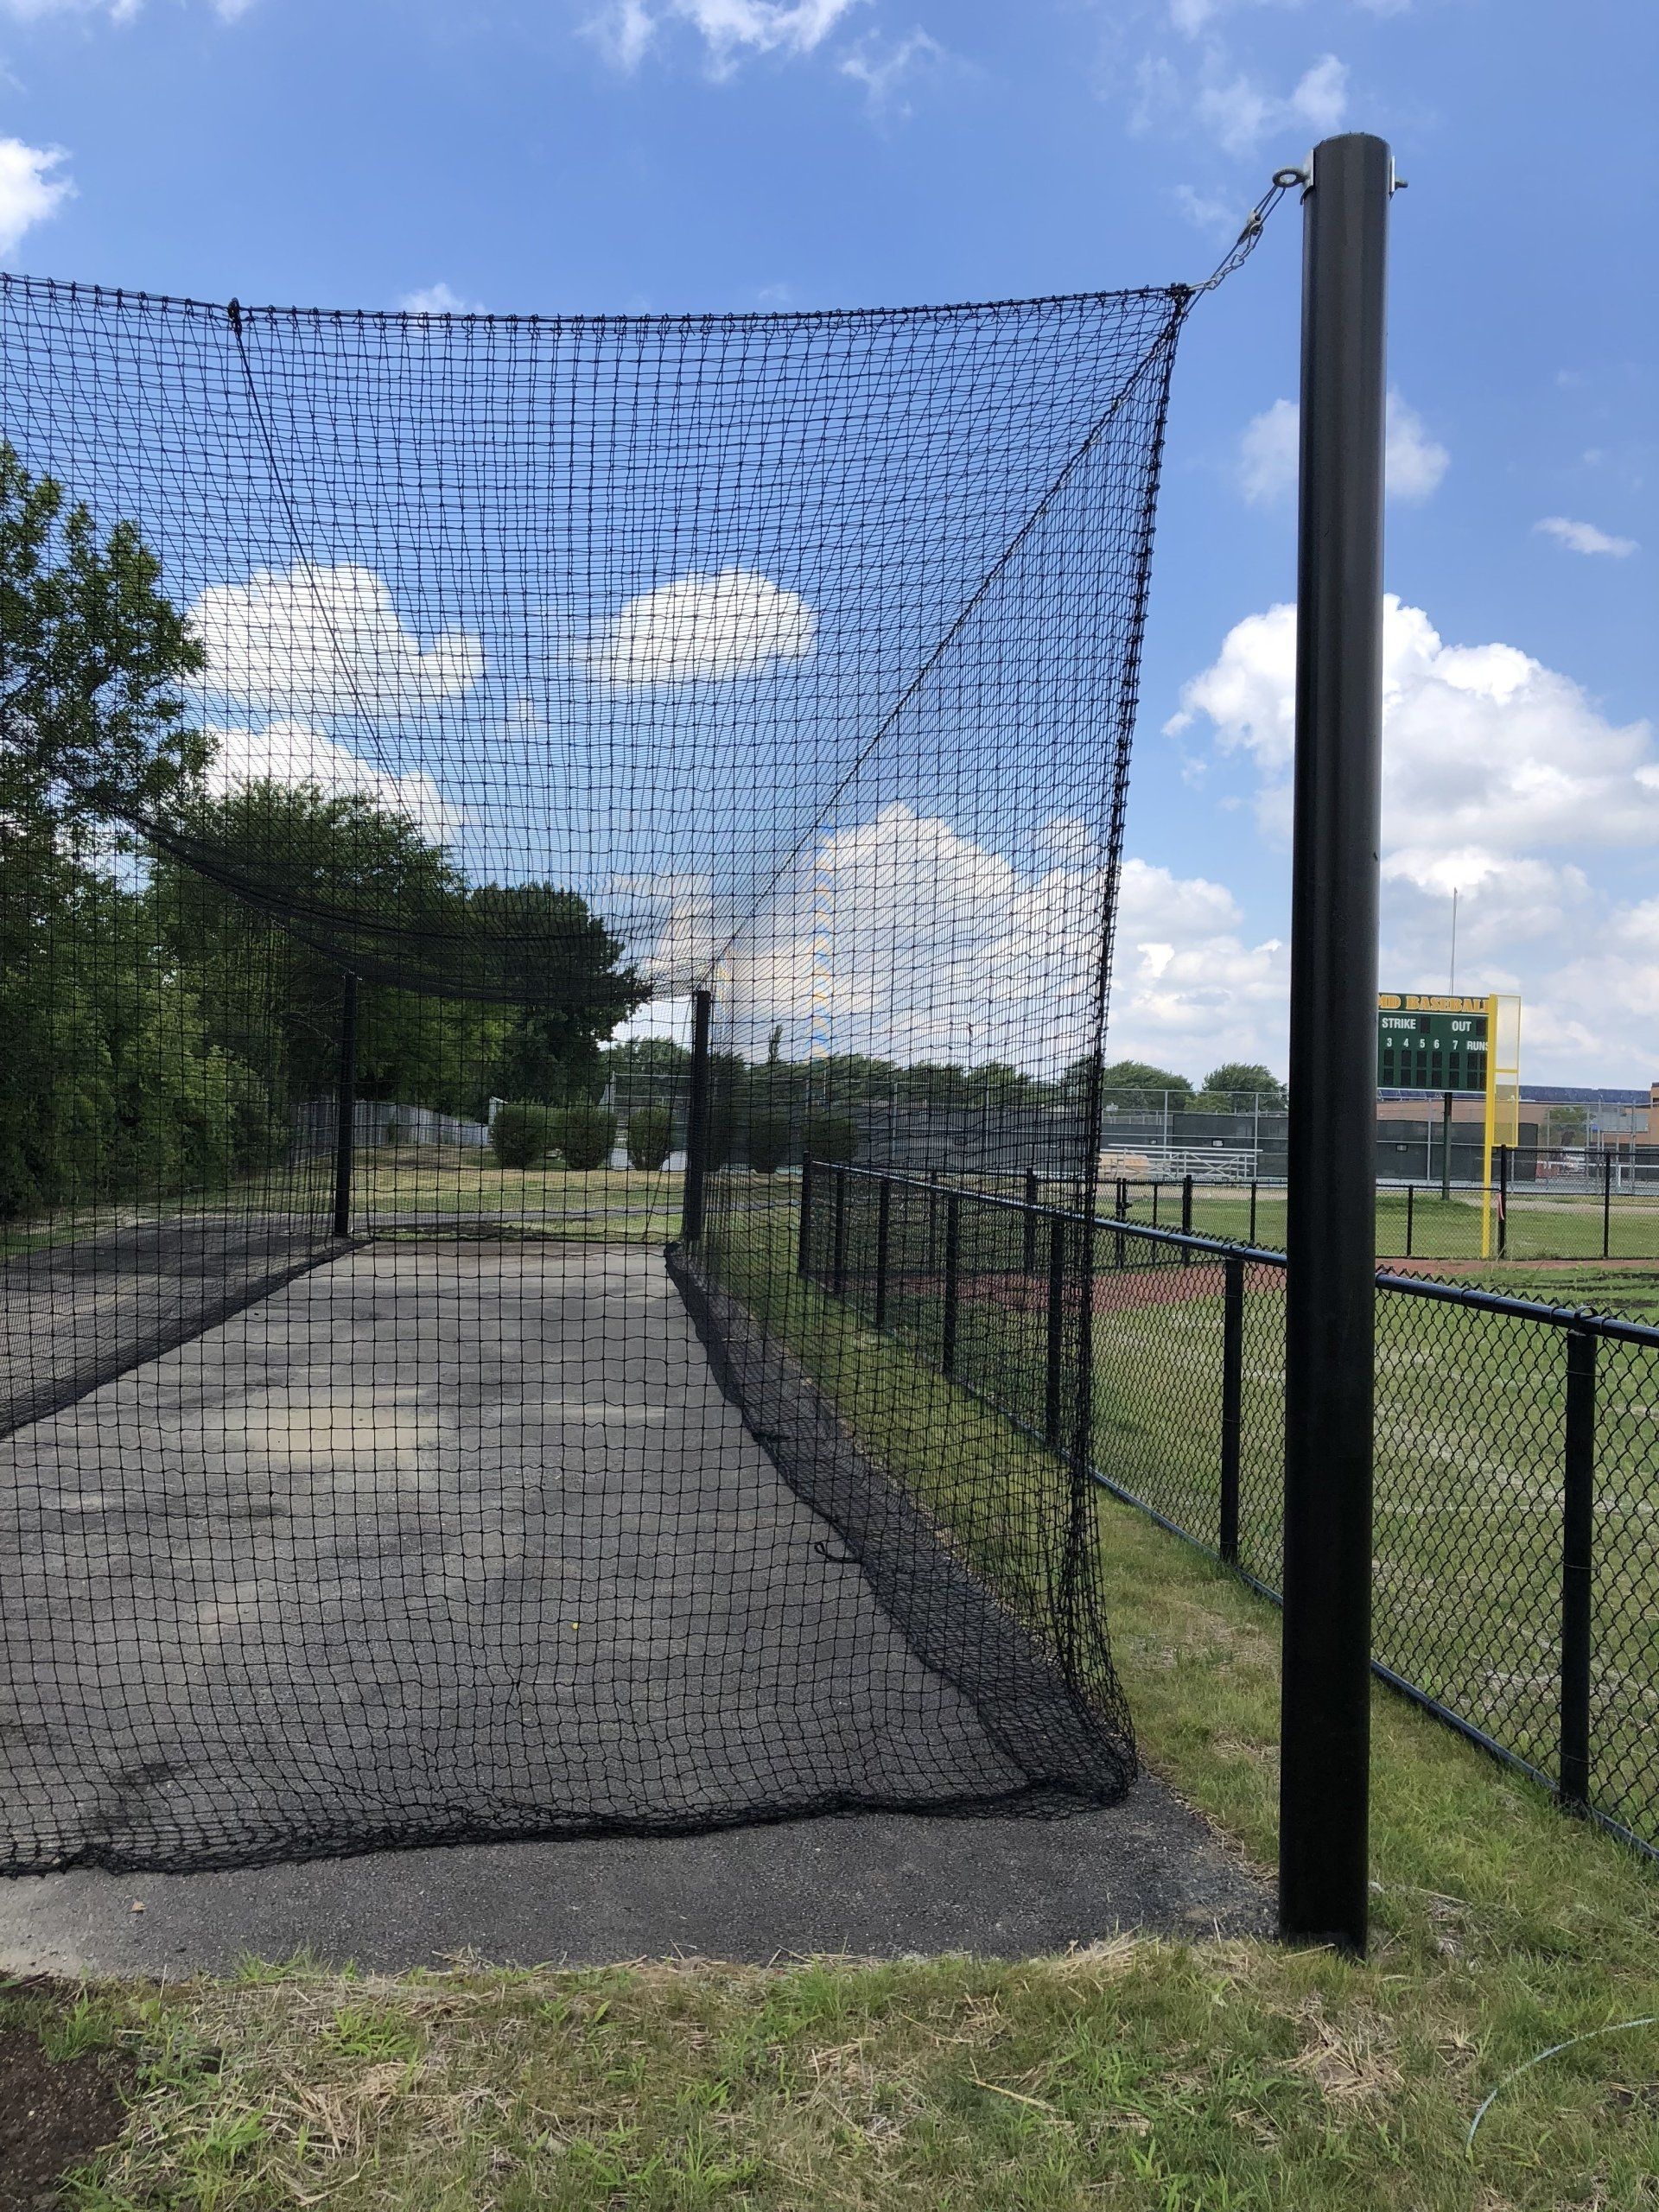 A baseball net is hanging over a baseball field.